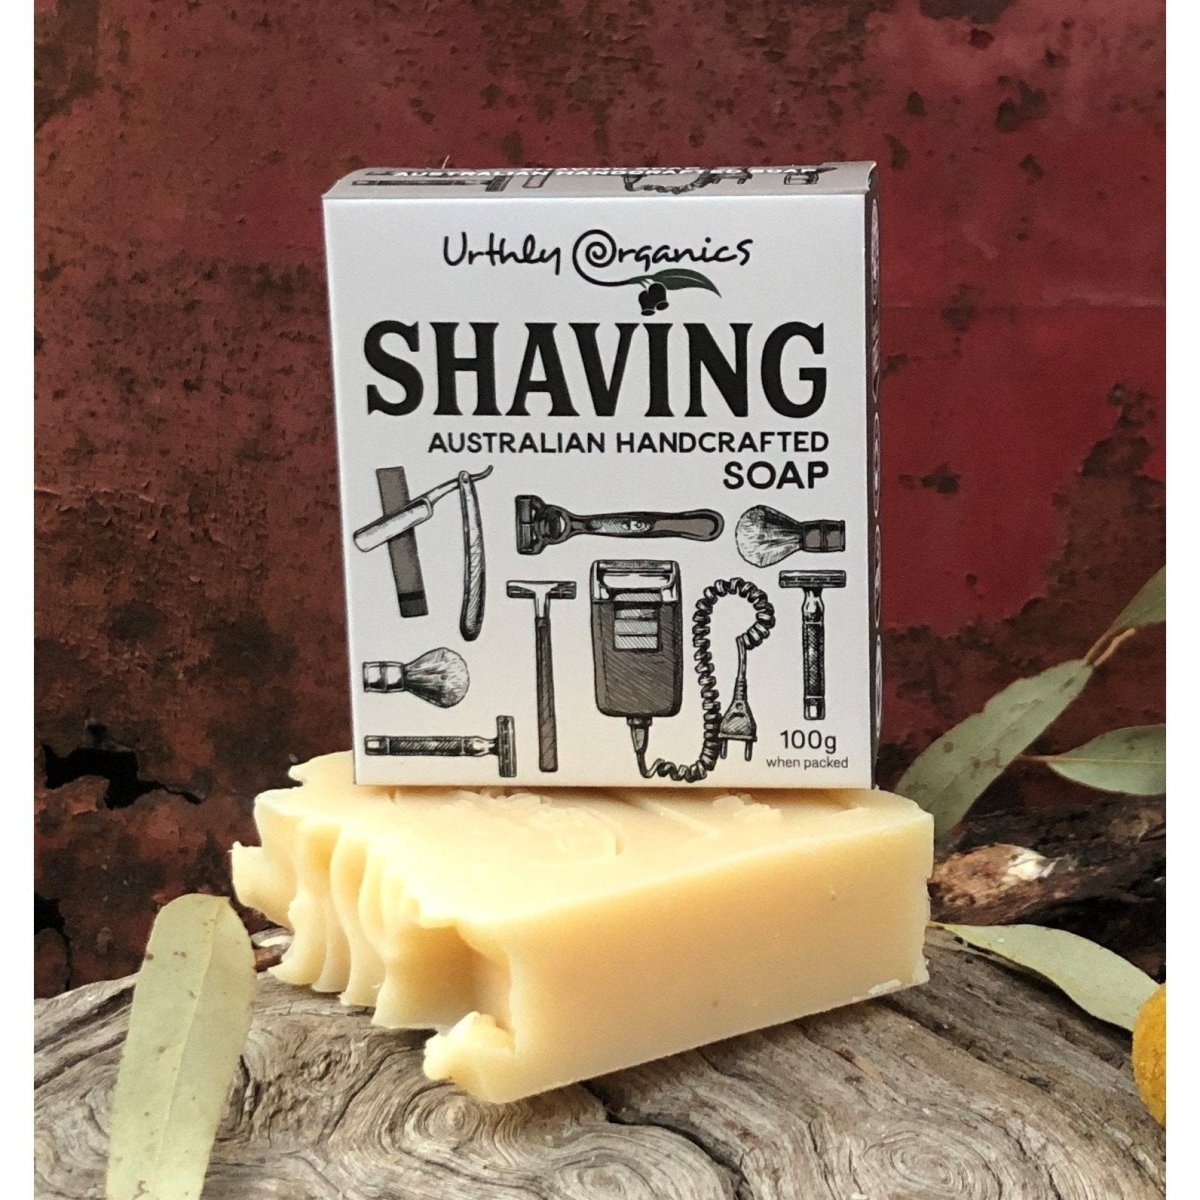 Urthly Organics Australian handcrafted Shaving Soap, 100g